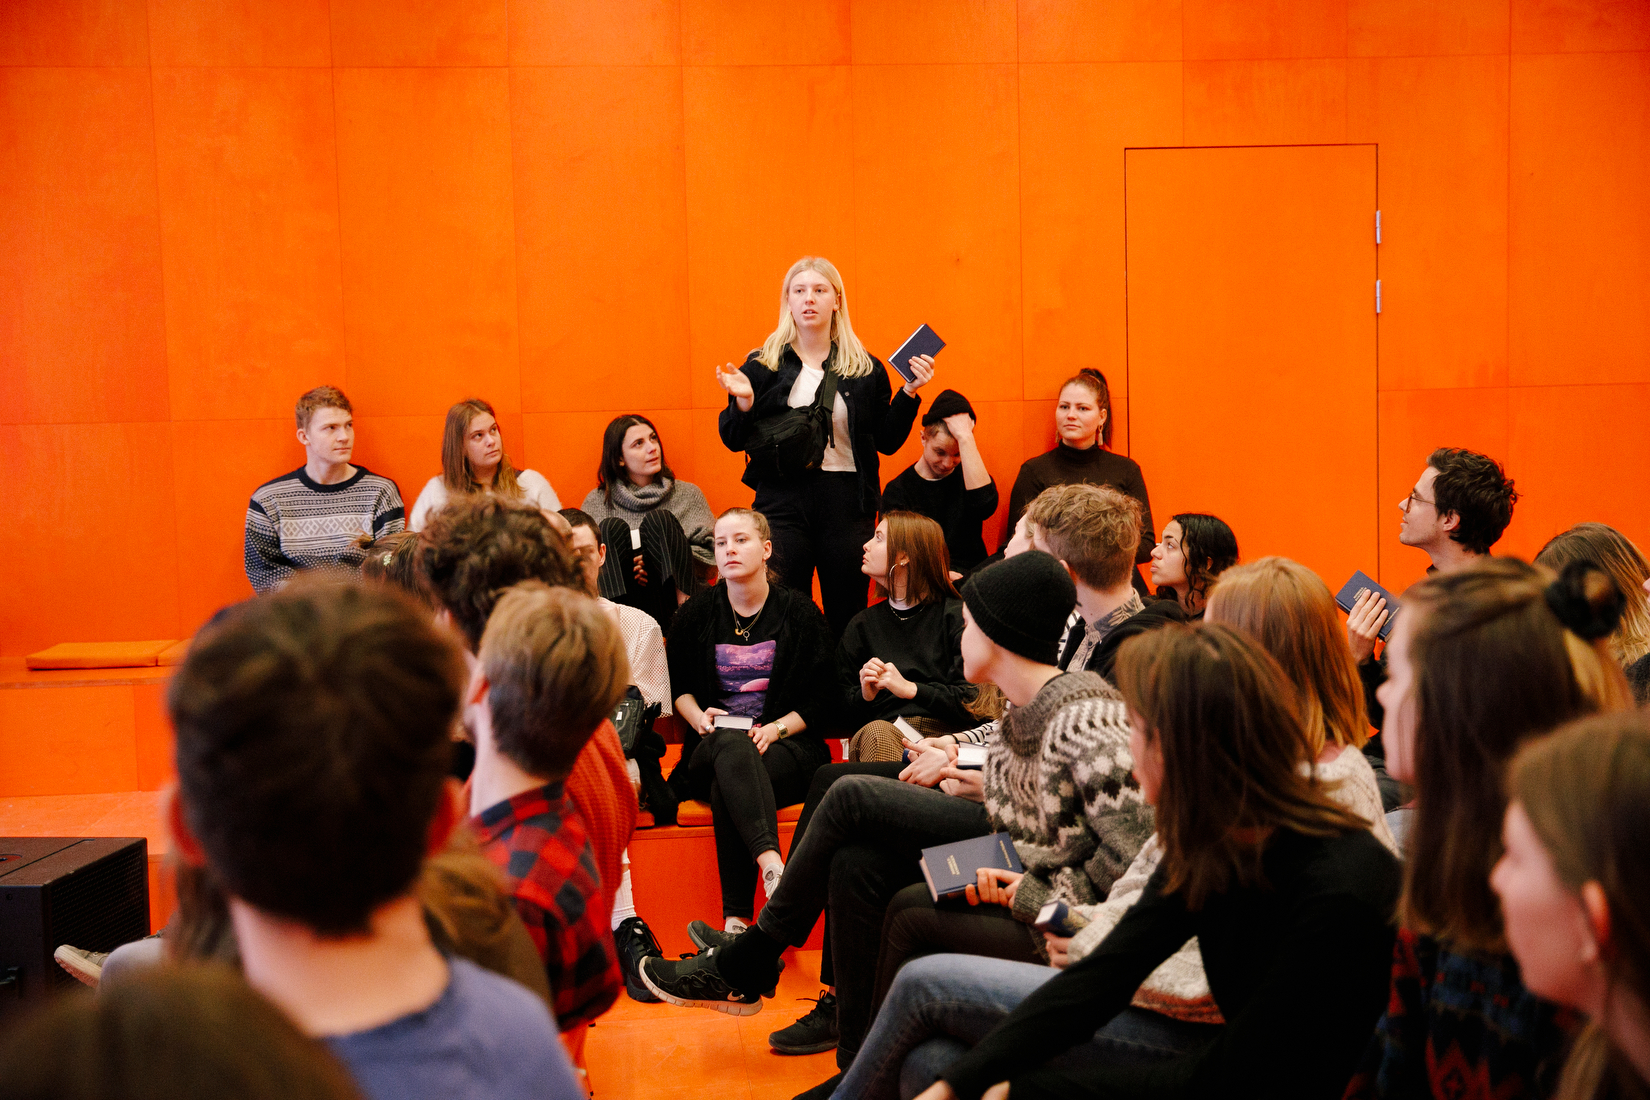 Foredragssalen er holdt i Roskilde Festivalens ikoniske farveholdning, ”orange feeling”. Foto: Daniel Hjorth